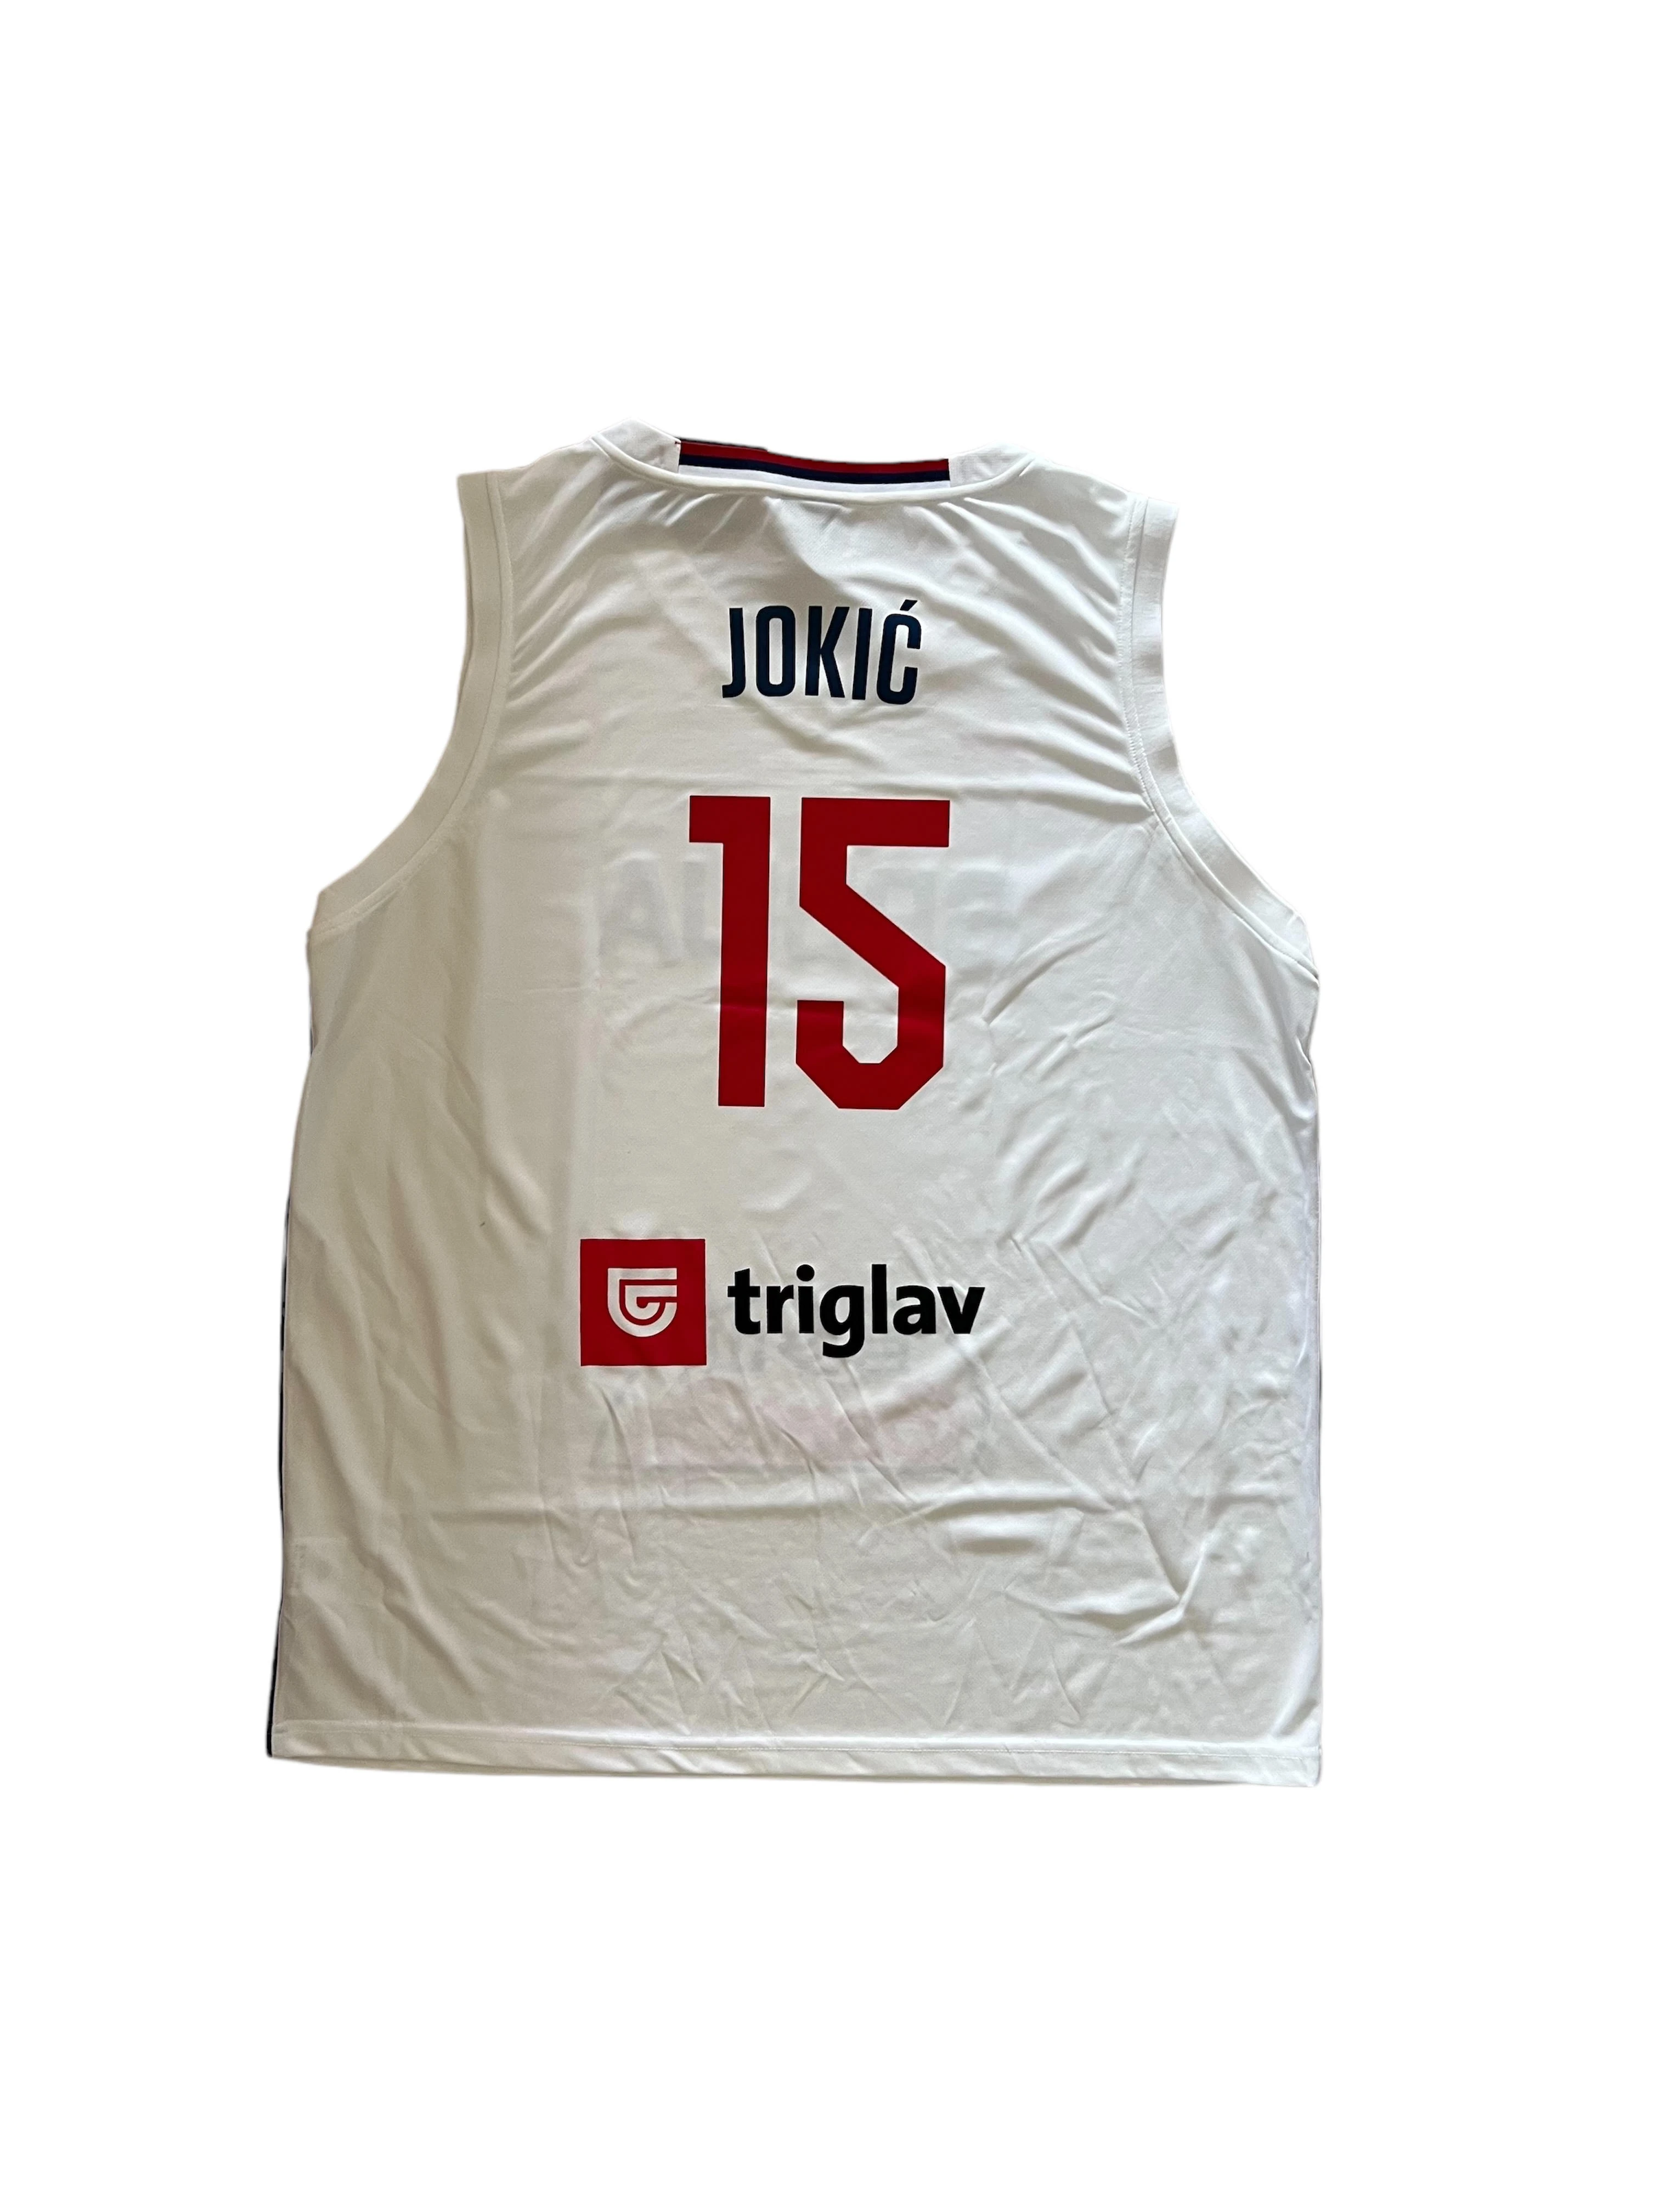 MALE JERSEY SERBIAN NATIONAL BASKETBALL TEAM WHITE - JOKIĆ 15-1